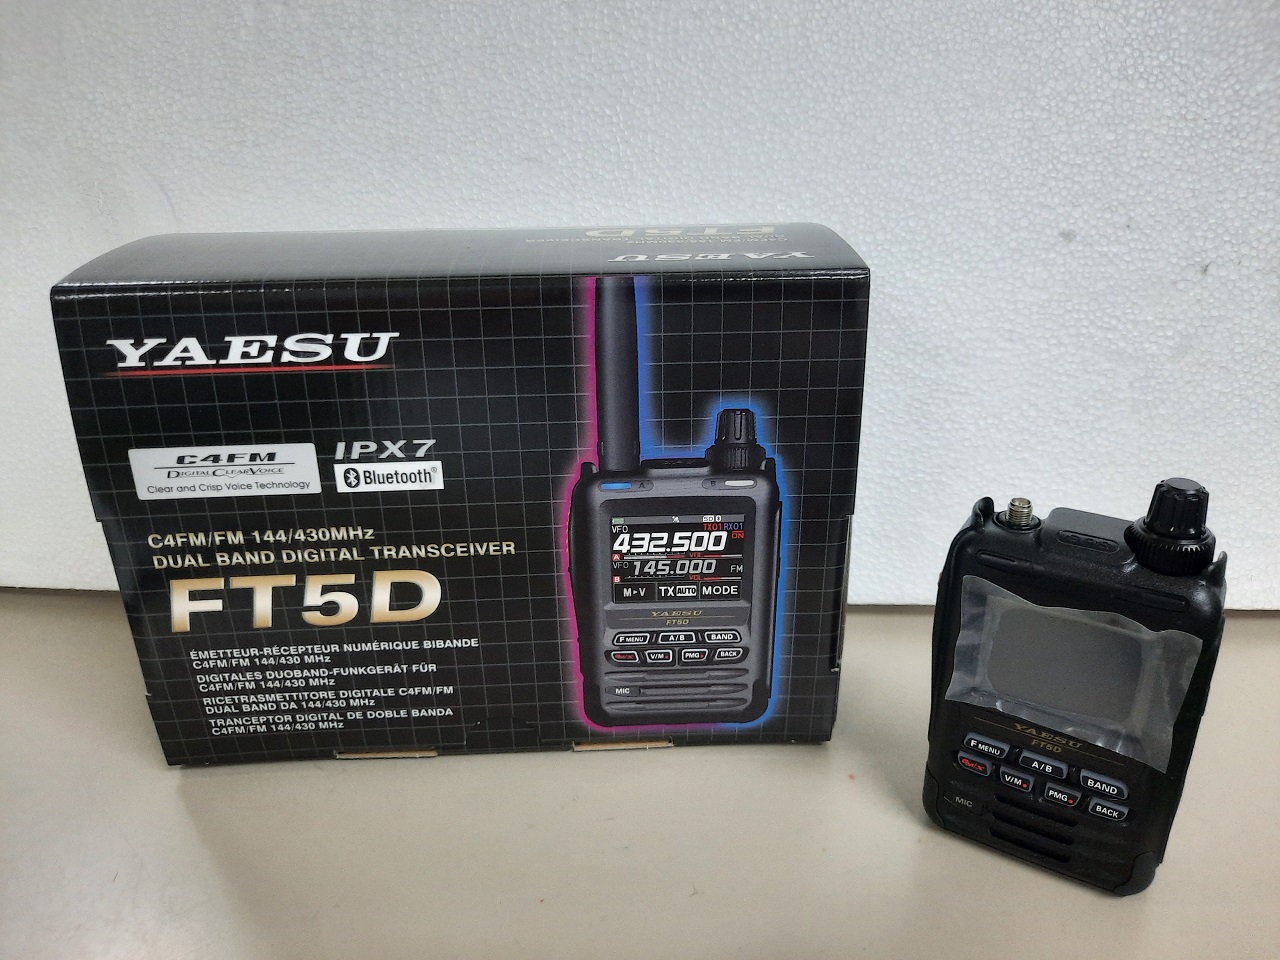  YAESU Yaesu FT-5DR C4FM/FM 144/430MHz Dual Band 5W Digital  Transceiver with Touch Screen Display Black : Electronics